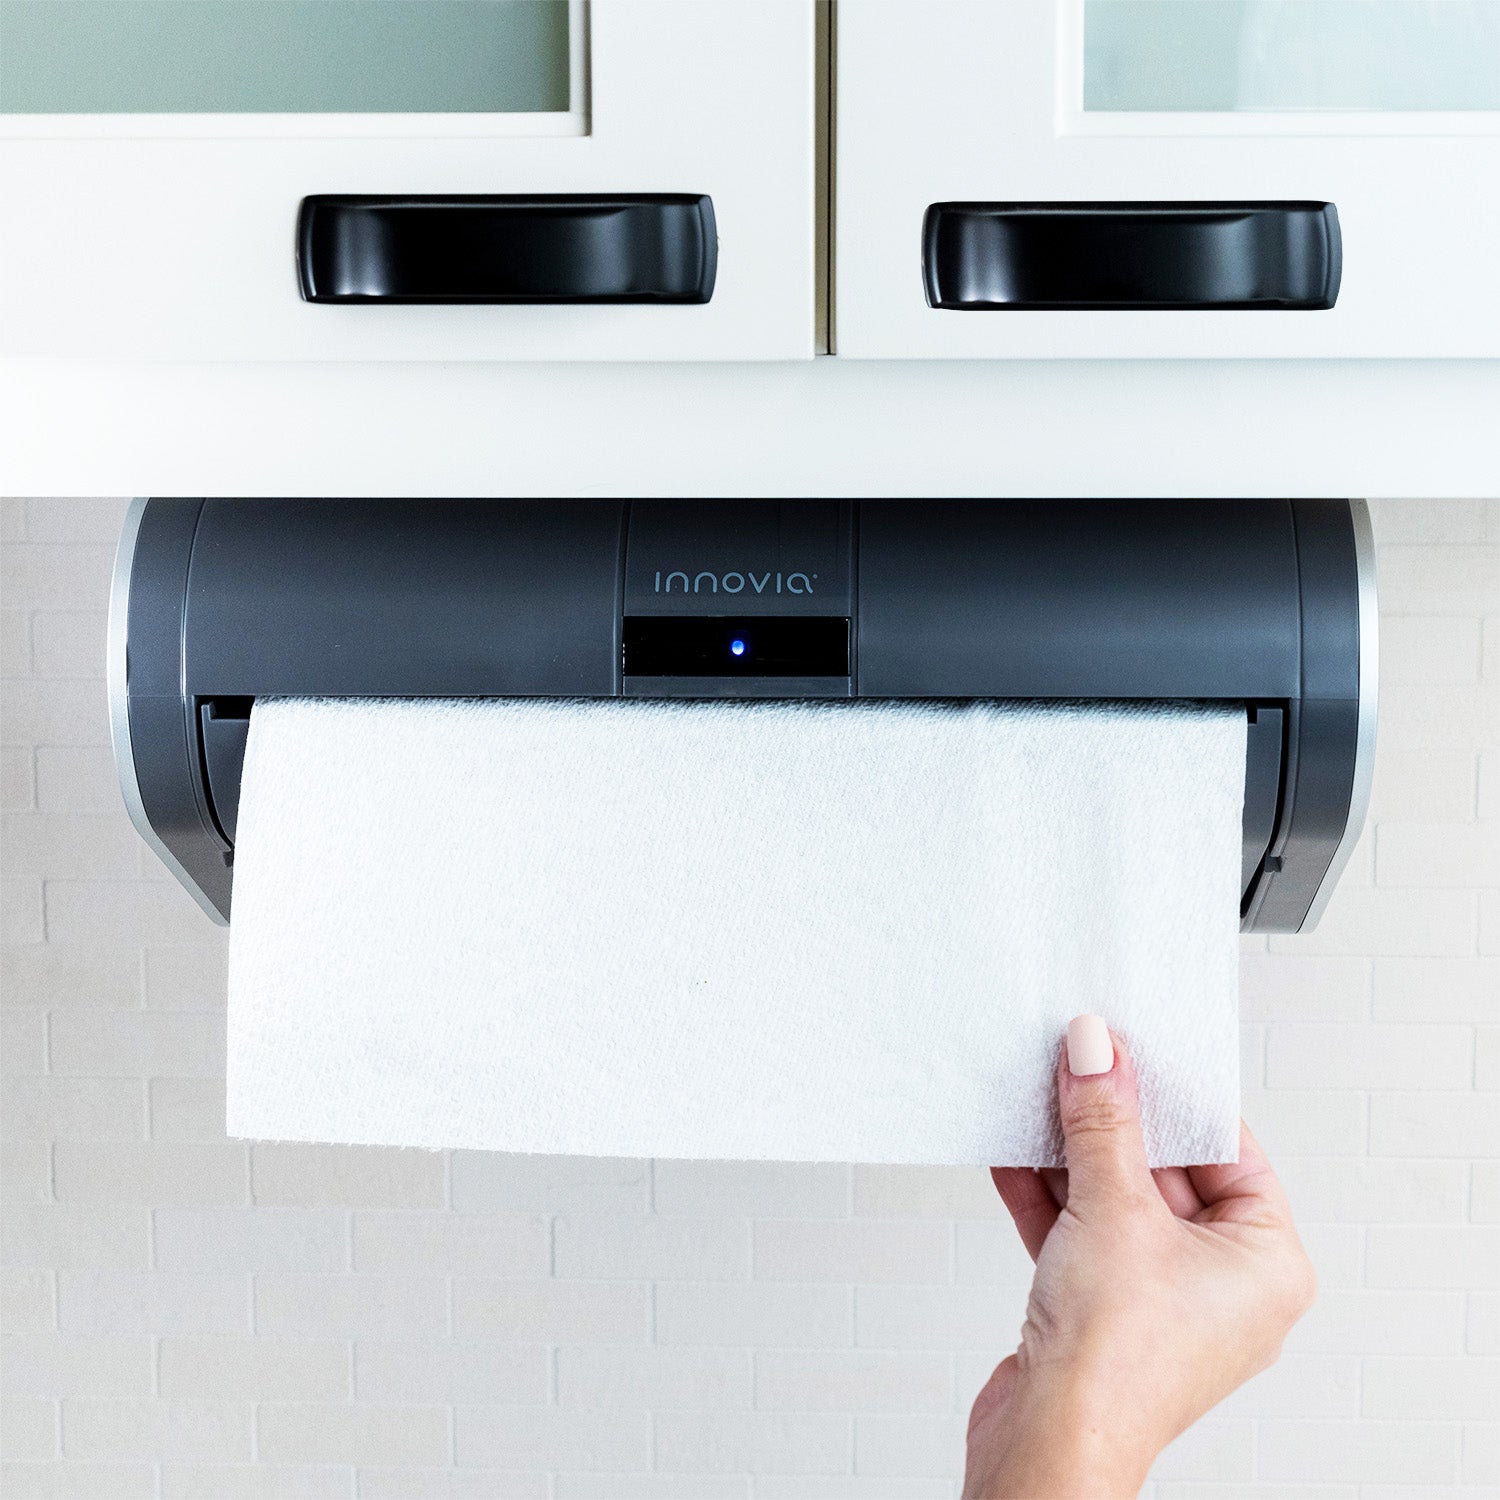 Innovia Home Innovation Automatic Paper Towel Dispenser